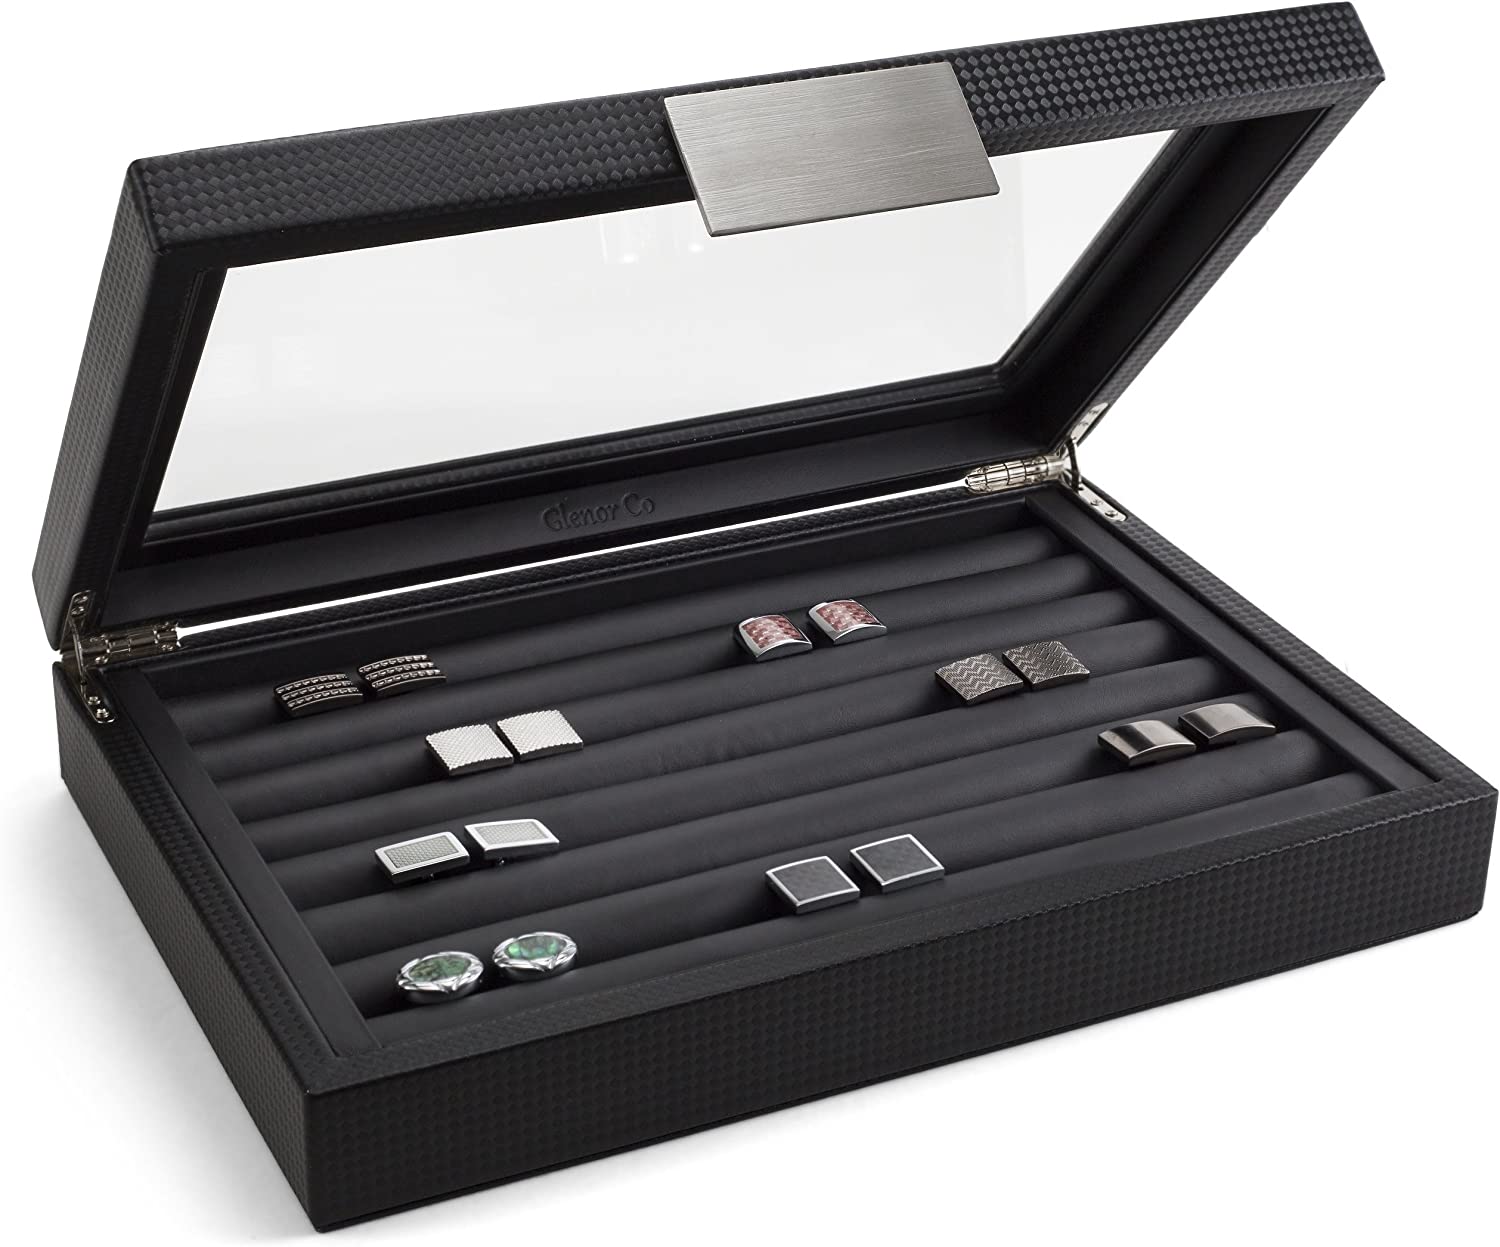 Glenor Co Cufflink Box for Men - Holds 70 Cufflinks - Luxury Display Jewelry Case -Carbon Fiber Design - Metal Buckle Holder, Large Glass Top - Black